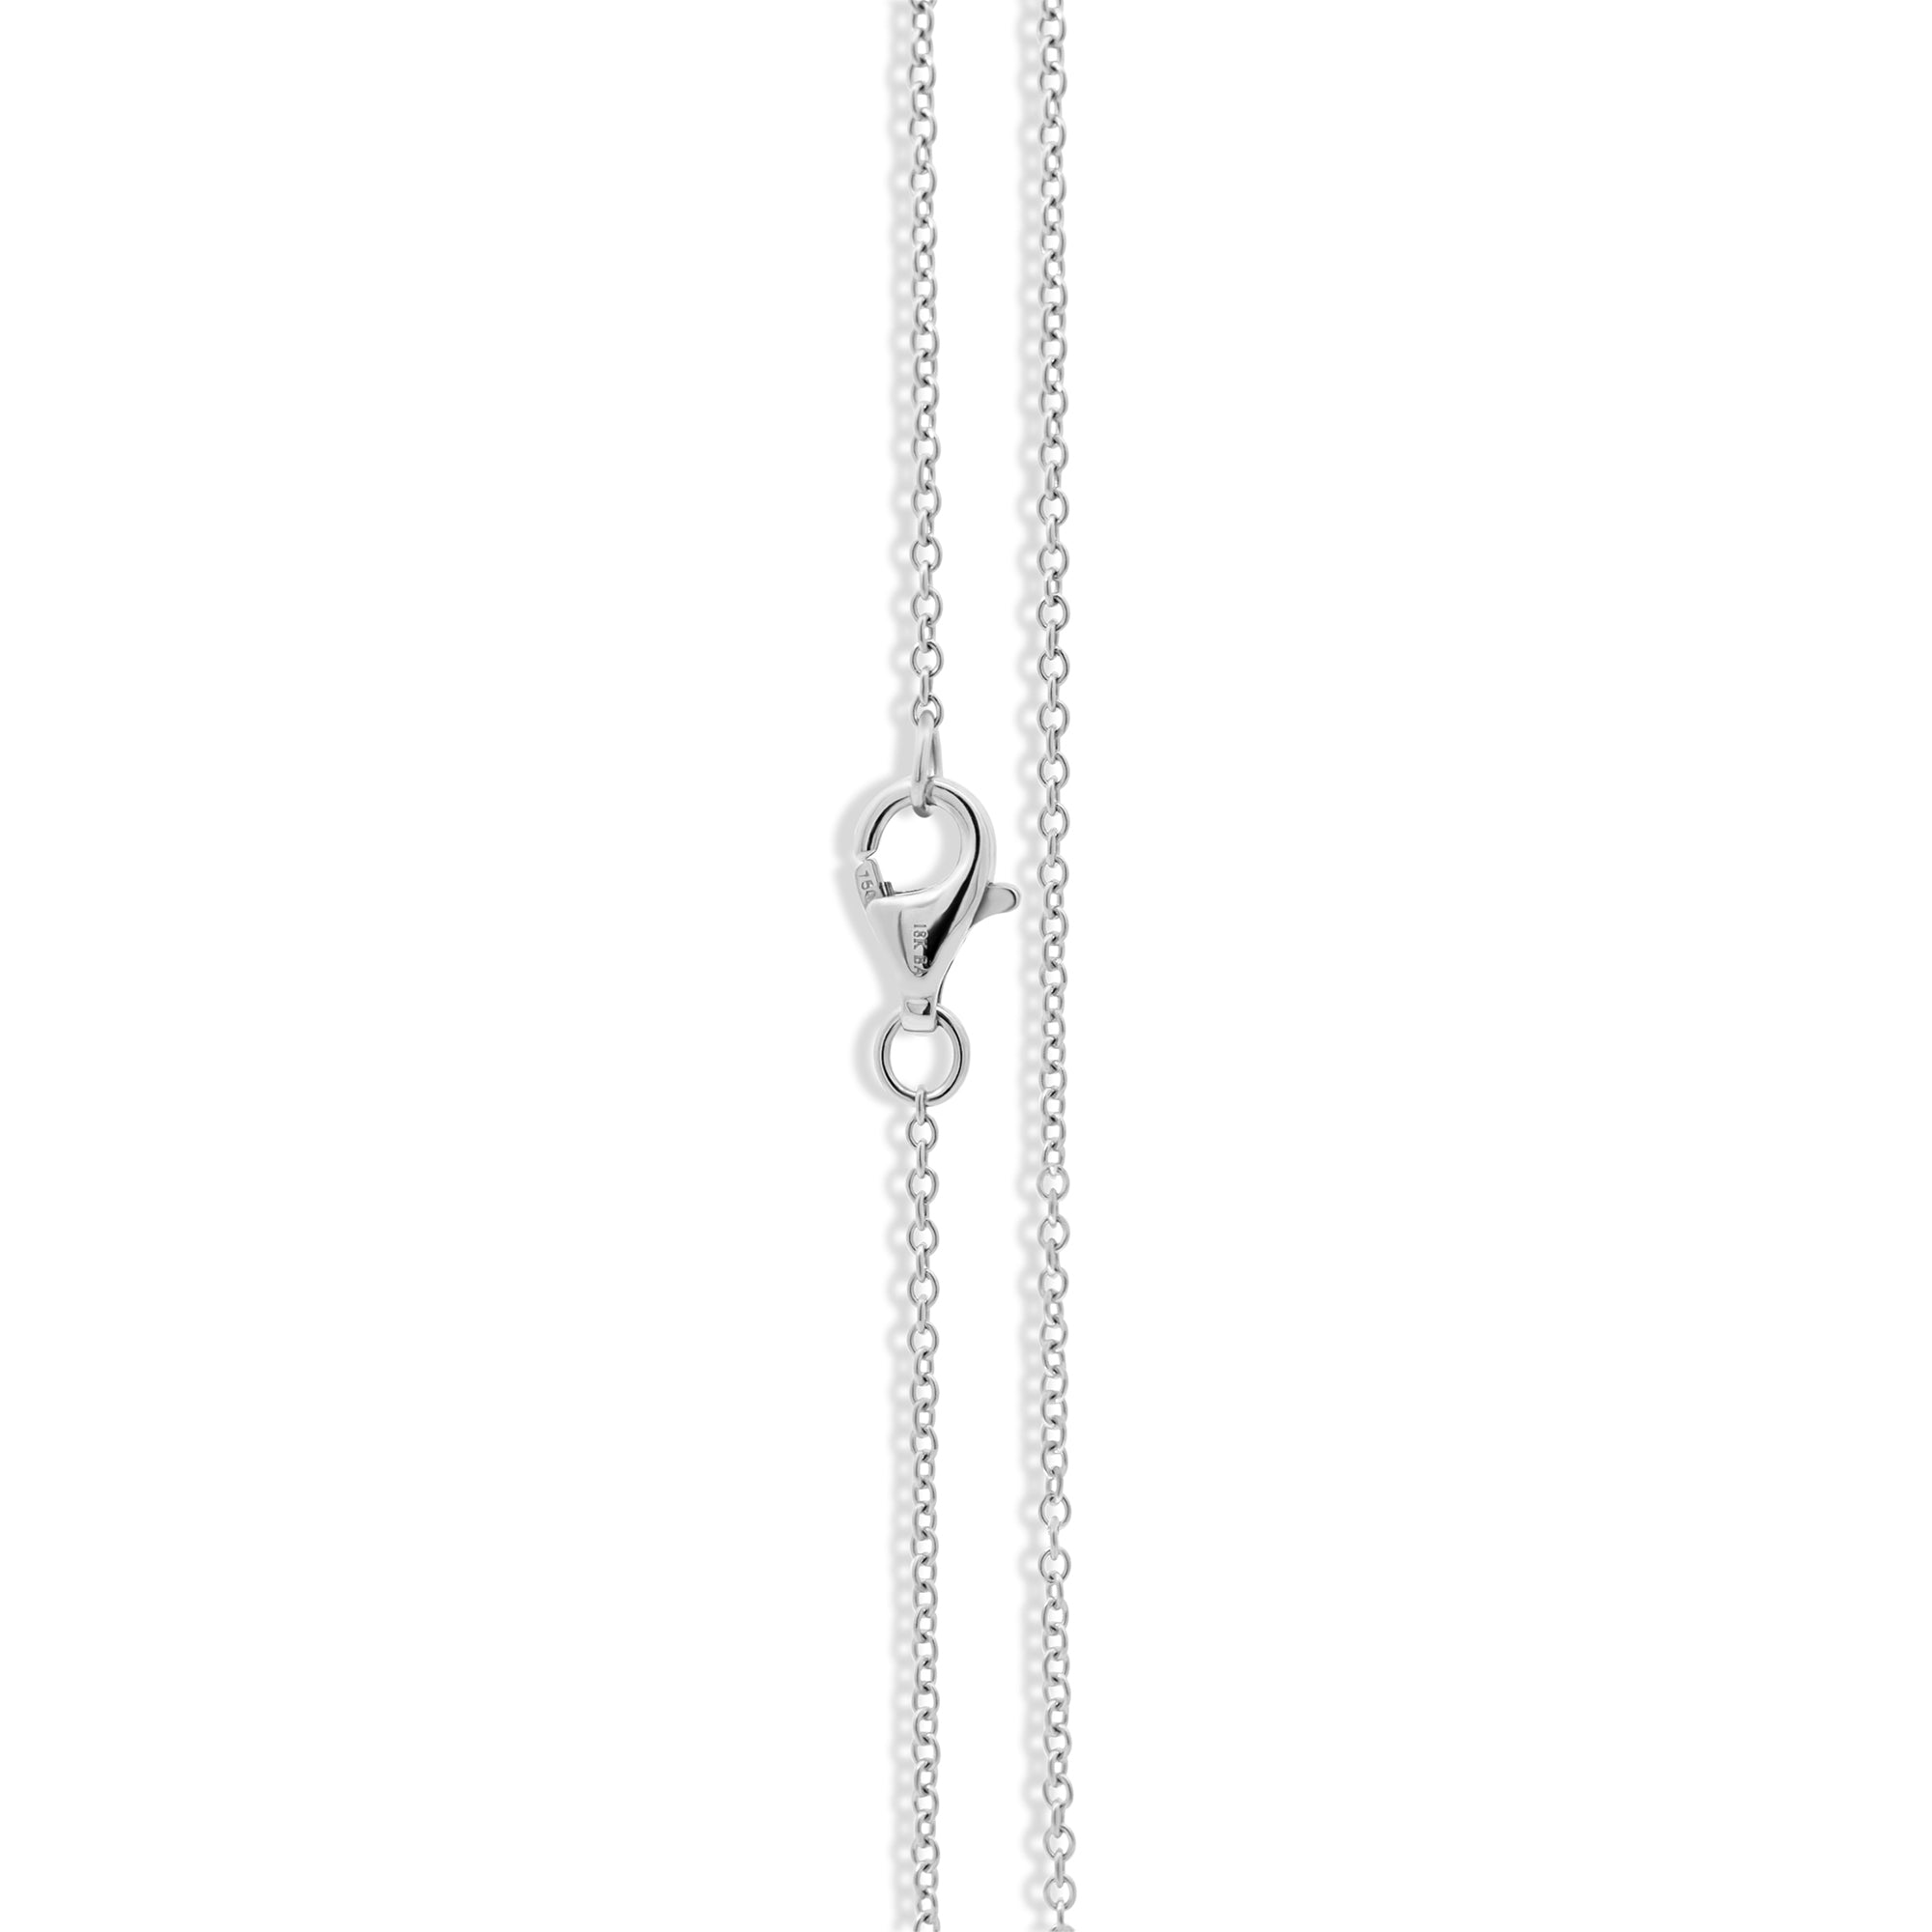 Gradient Diamond Chain Necklace